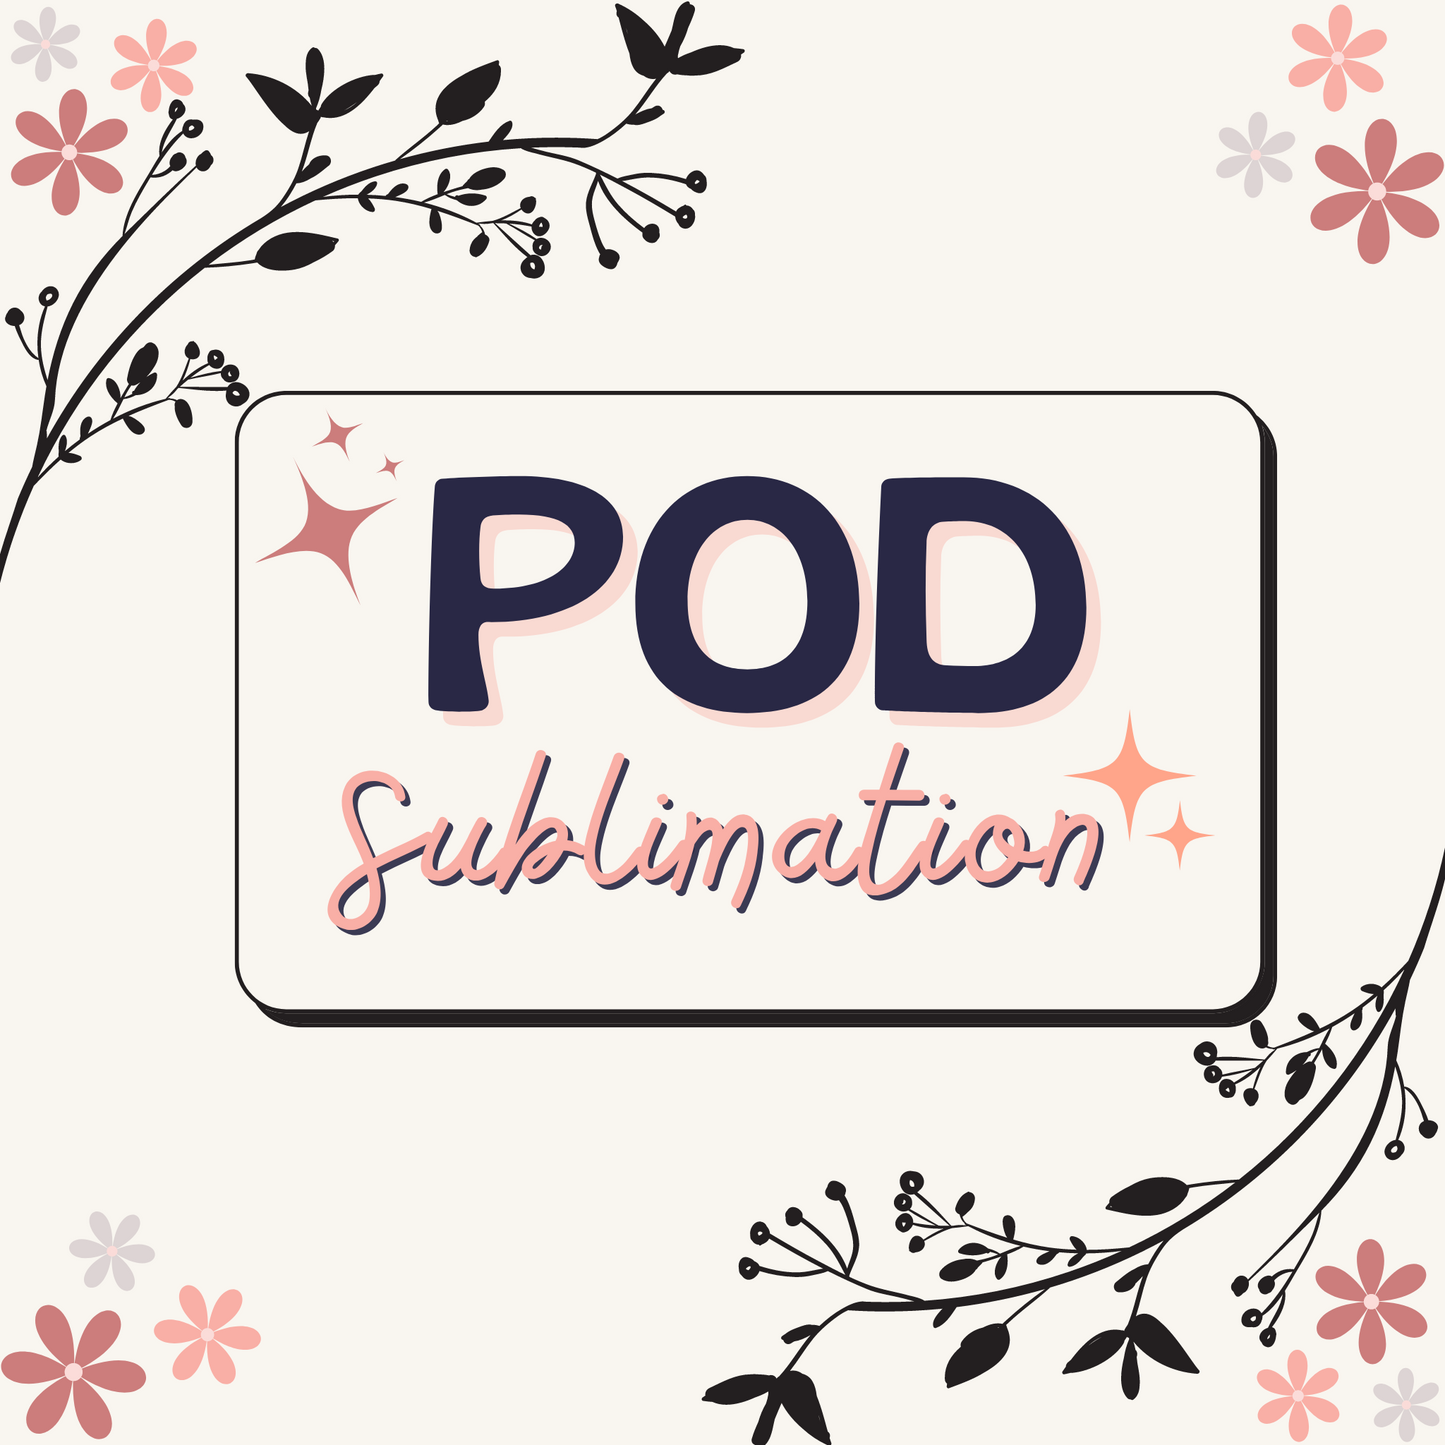 POD/Sublimation